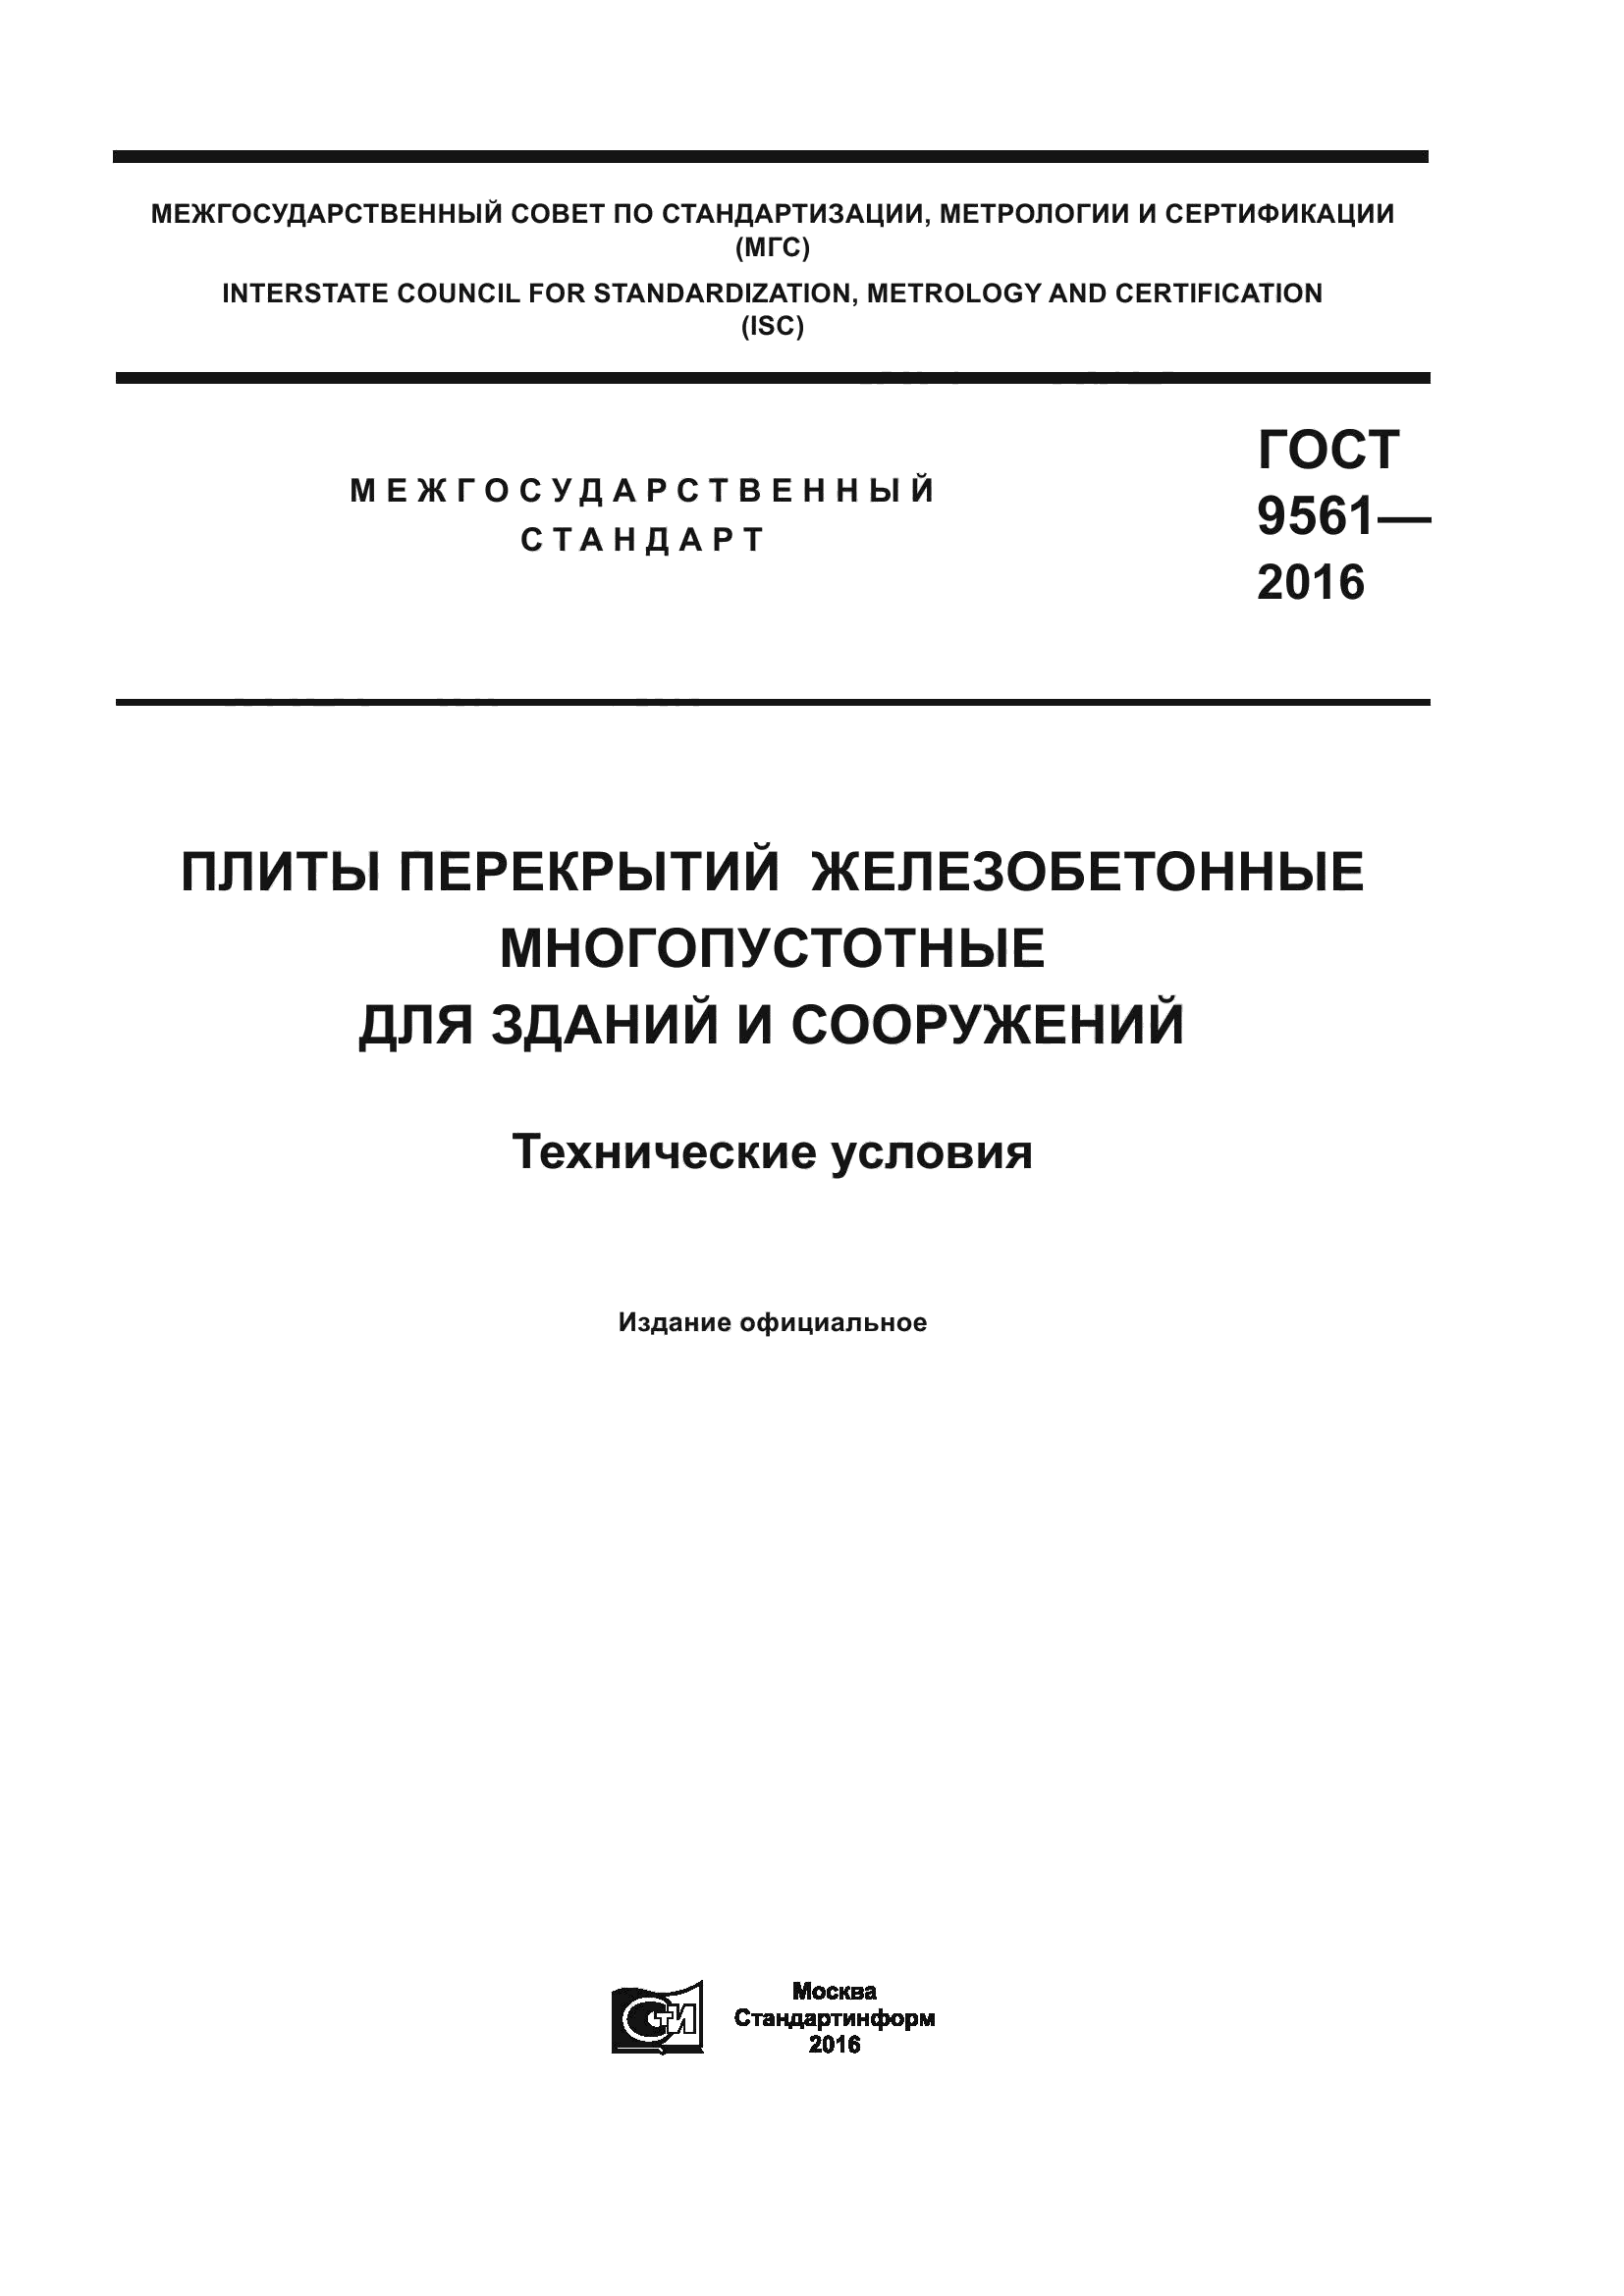 ГОСТ 9561-2016